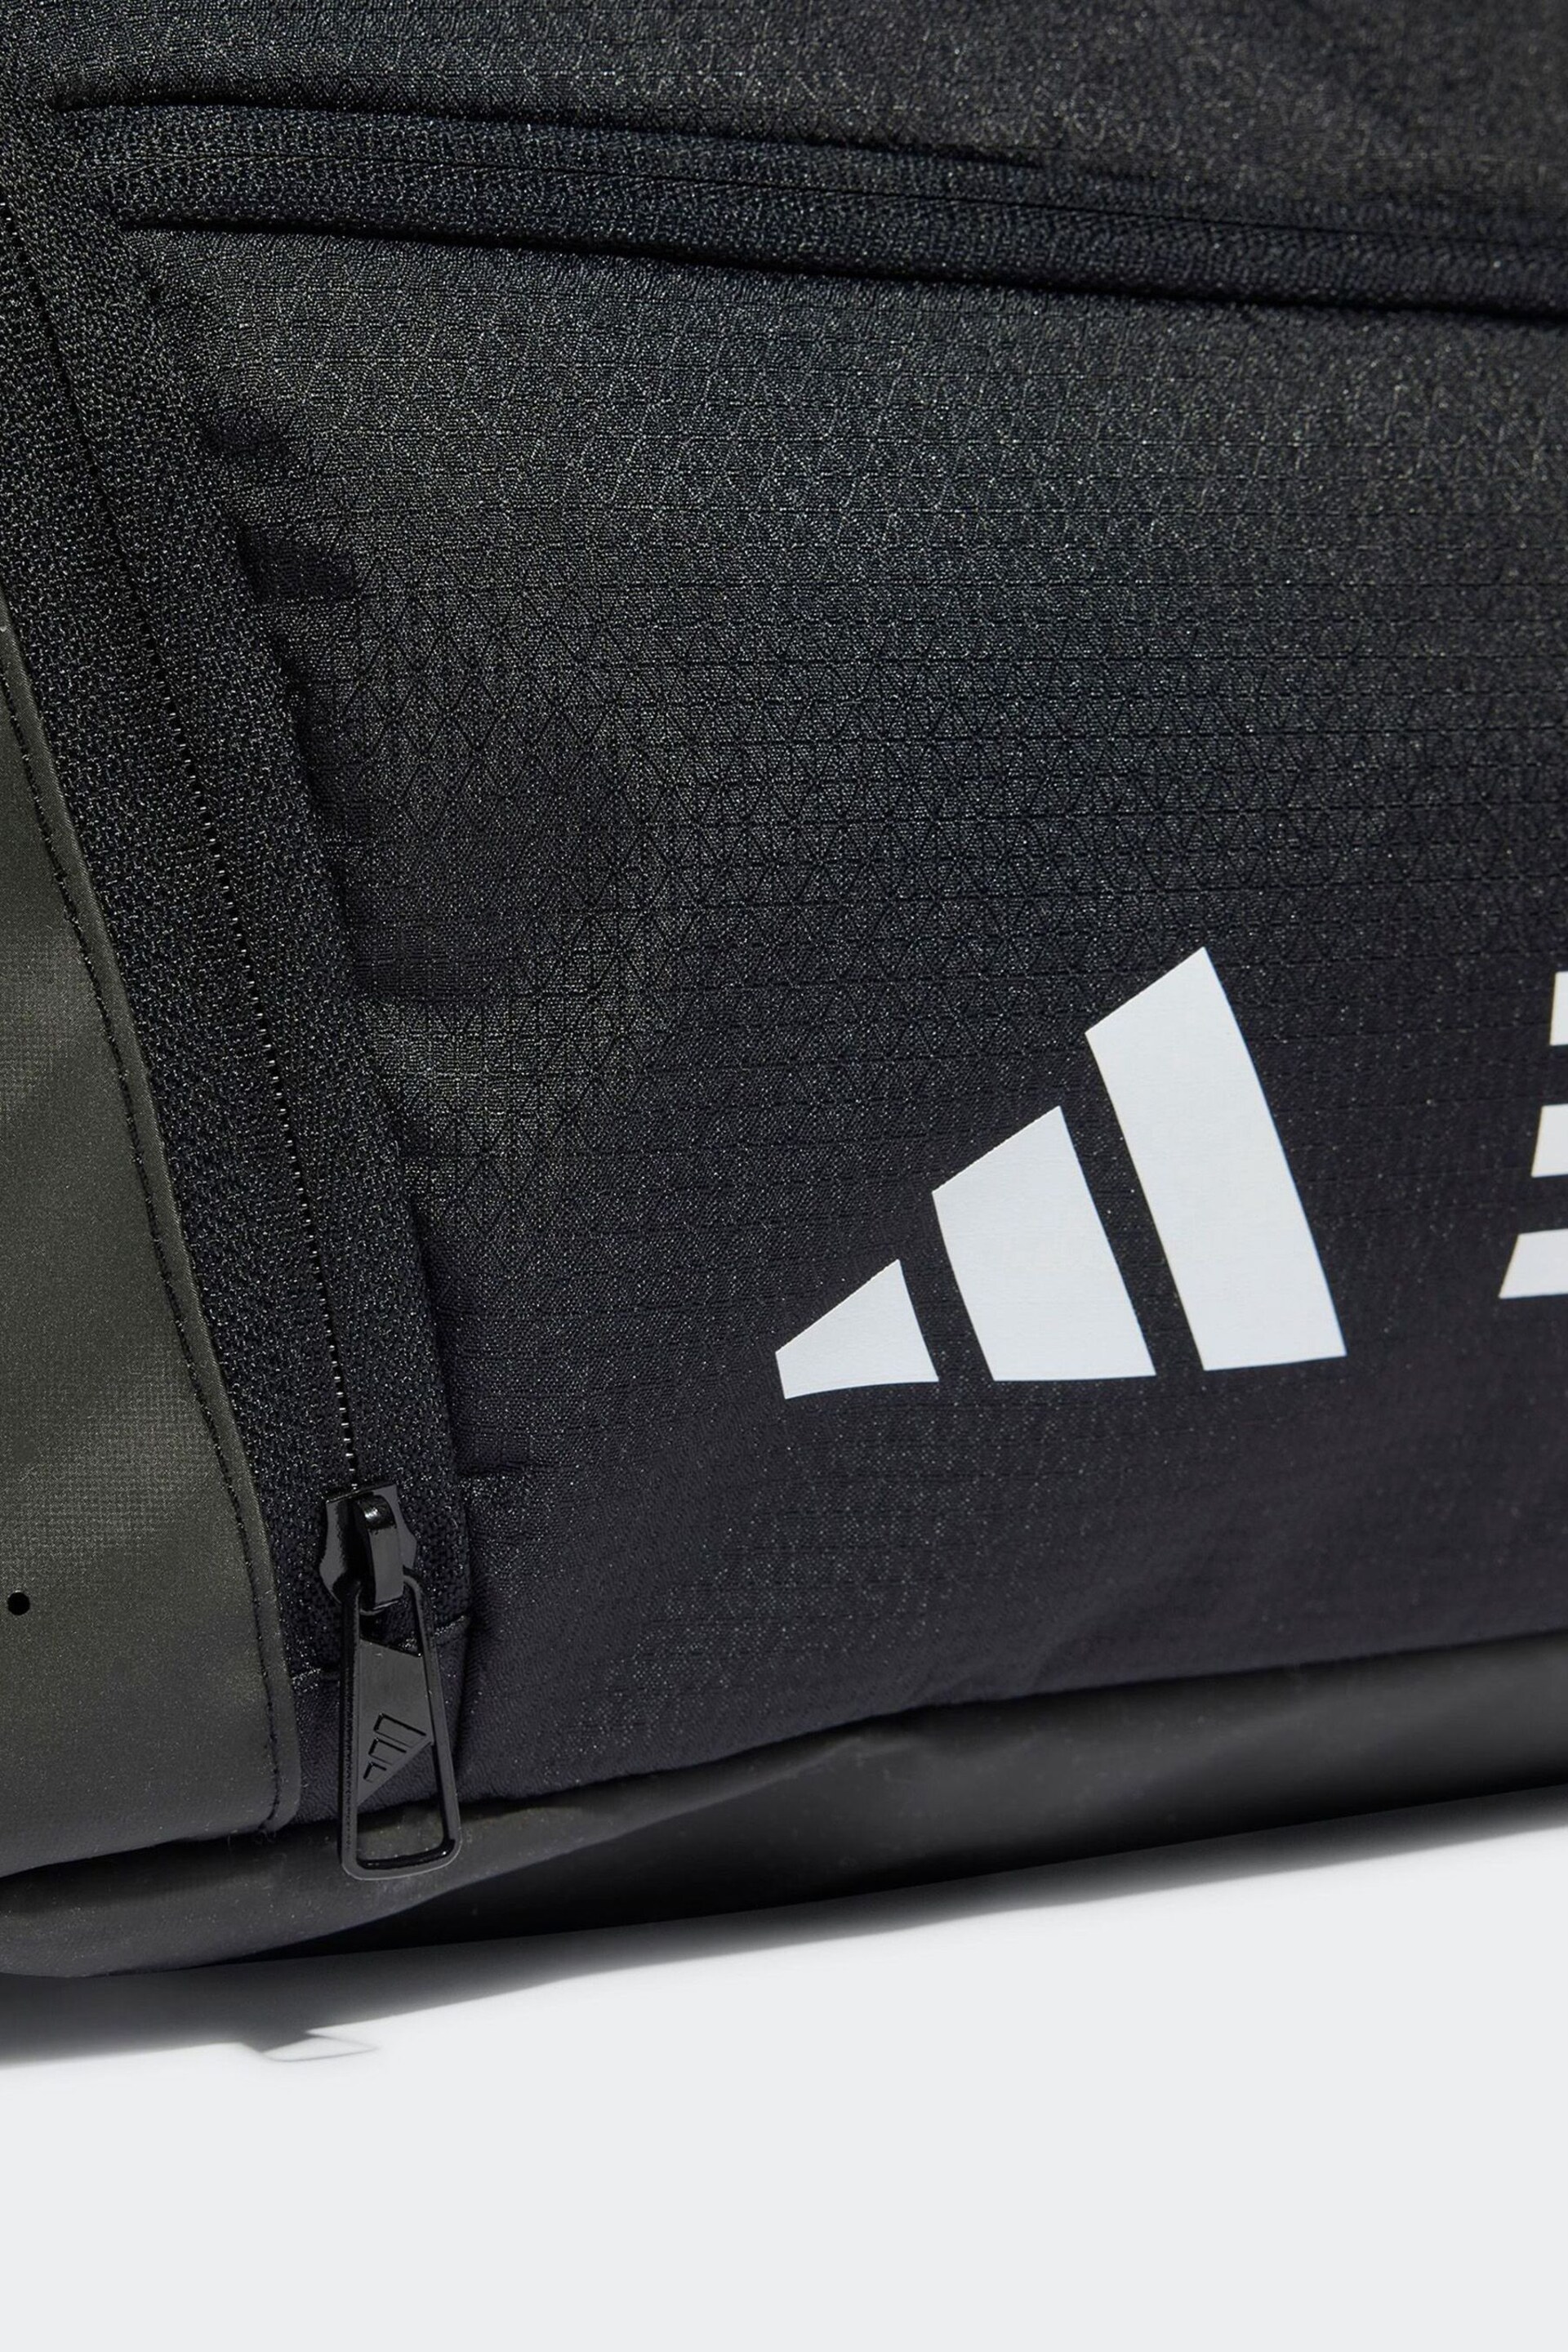 adidas Black Duffle Bag - Image 4 of 5